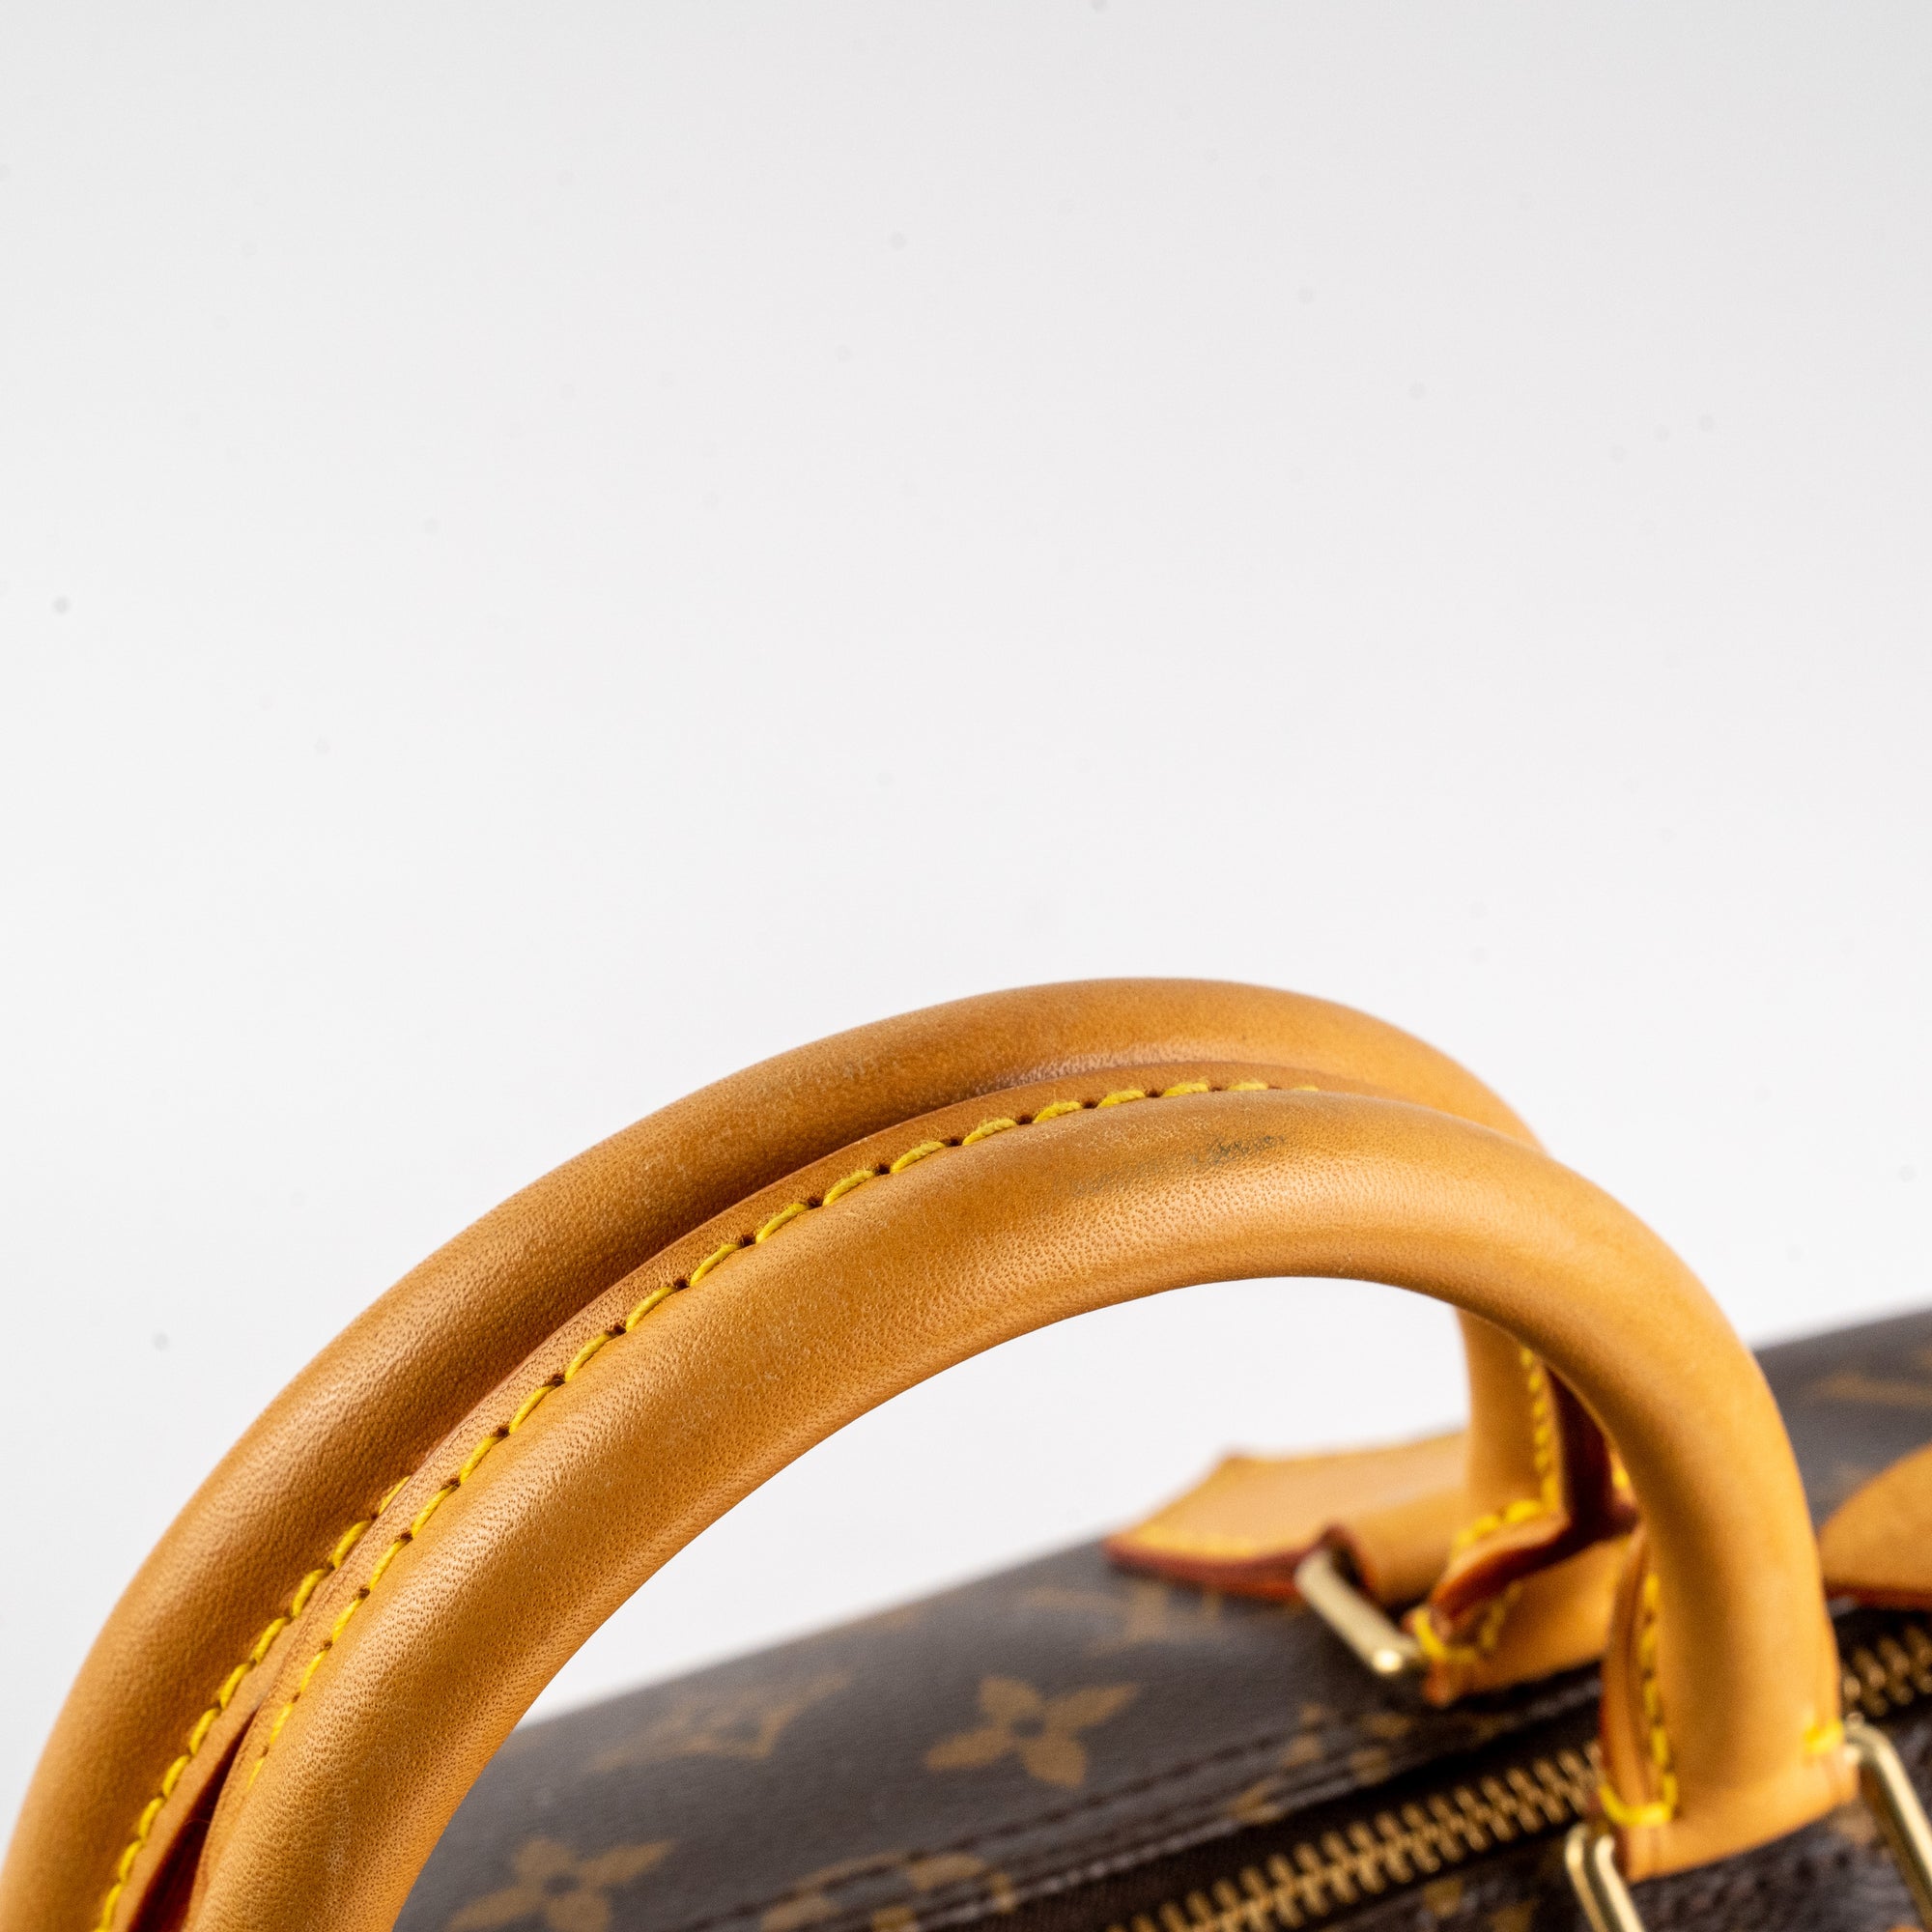 Louis Vuitton Monogram Speedy 35 Handbag - AWL1794